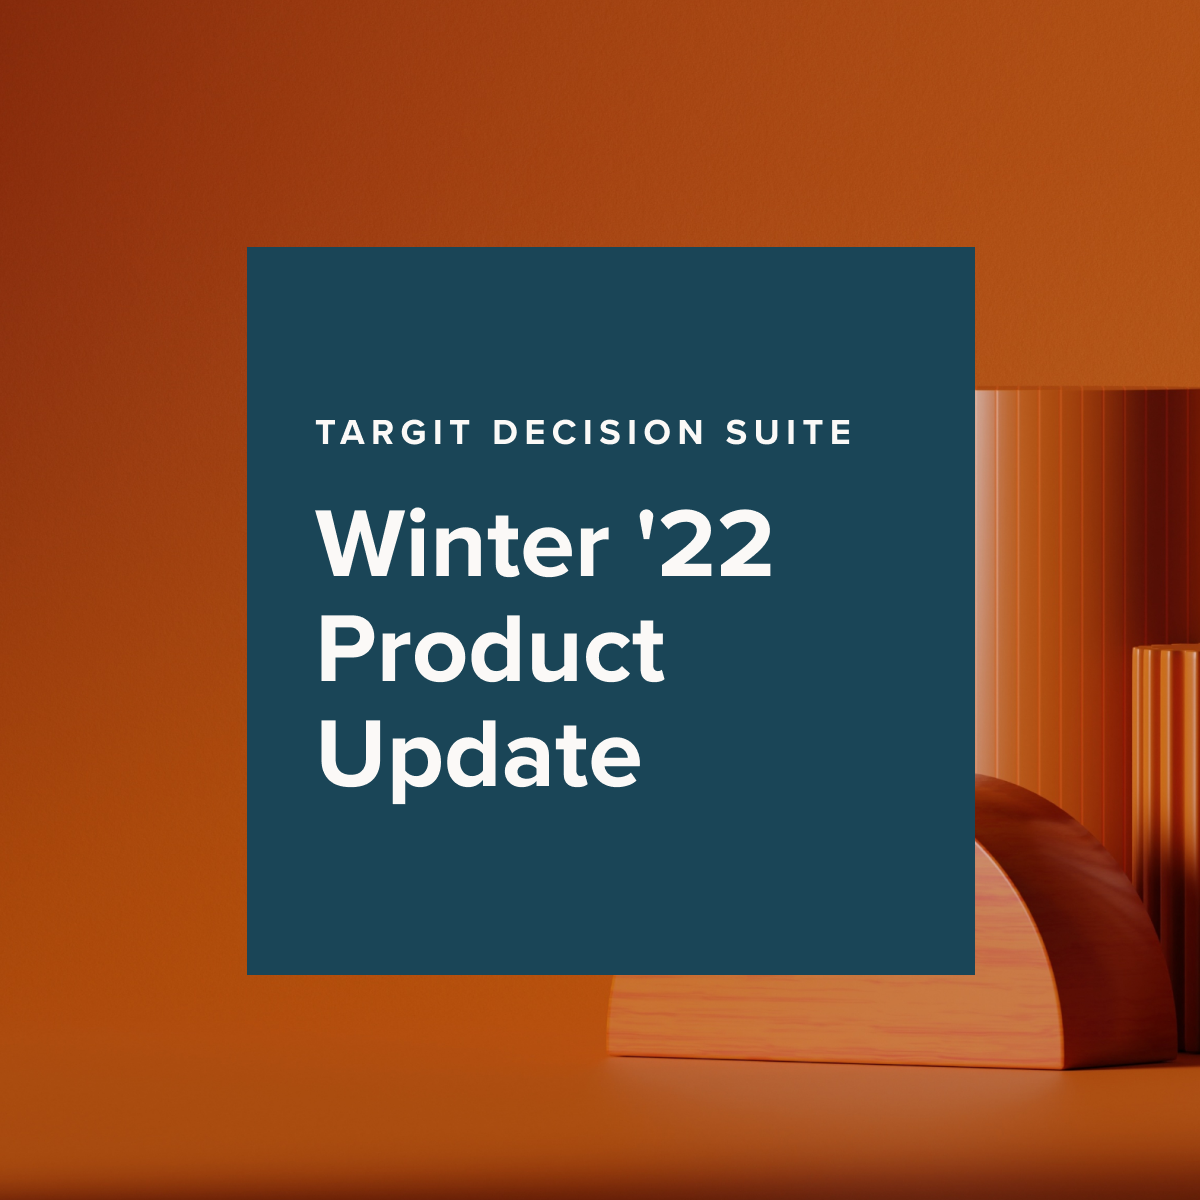 Introducing TARGIT Winter '22 Product Update